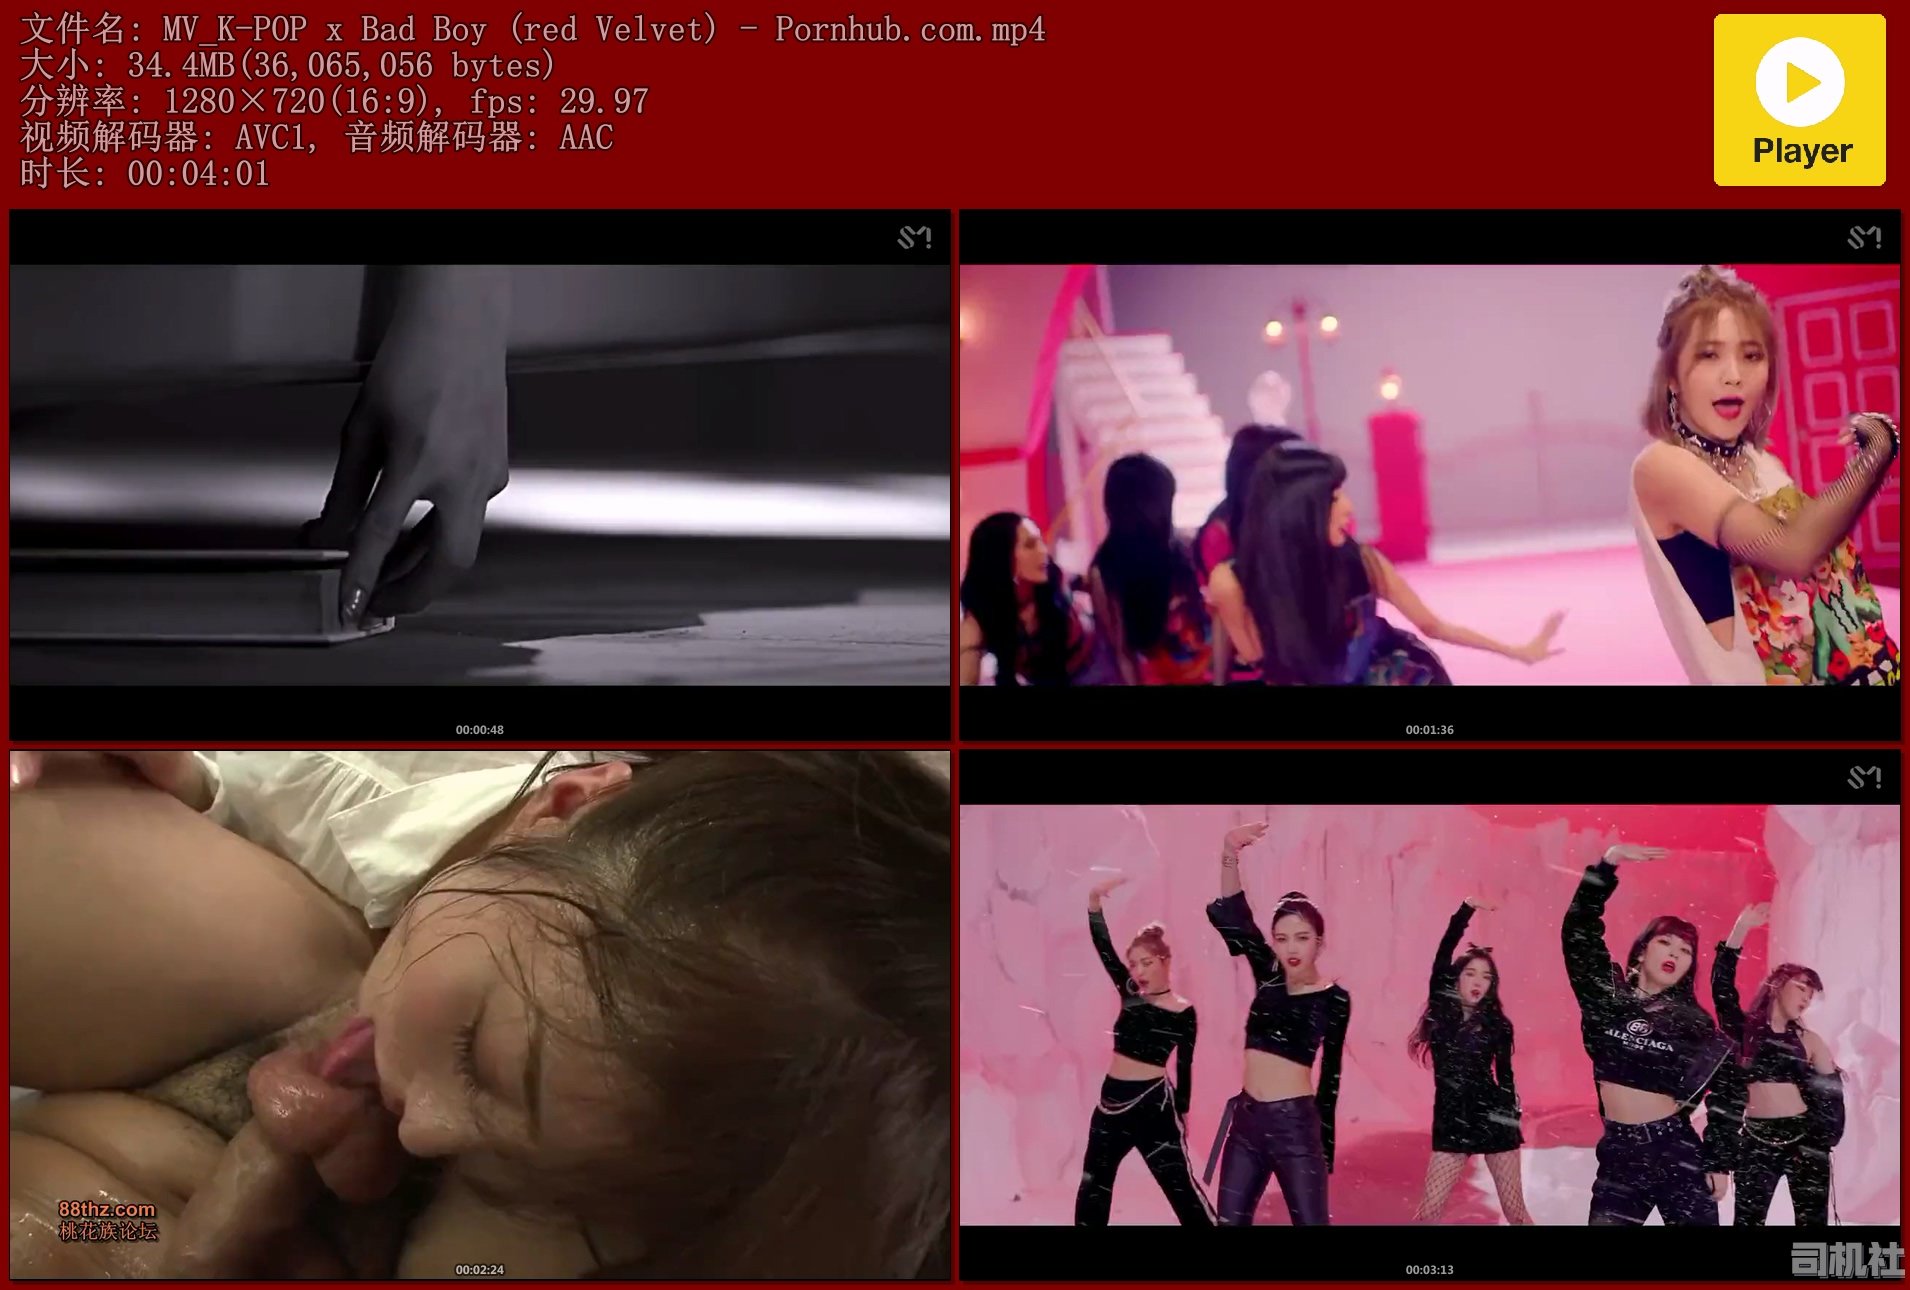 MV_K-POP x Bad Boy (red Velvet) - Pornhub.com.mp4.jpg